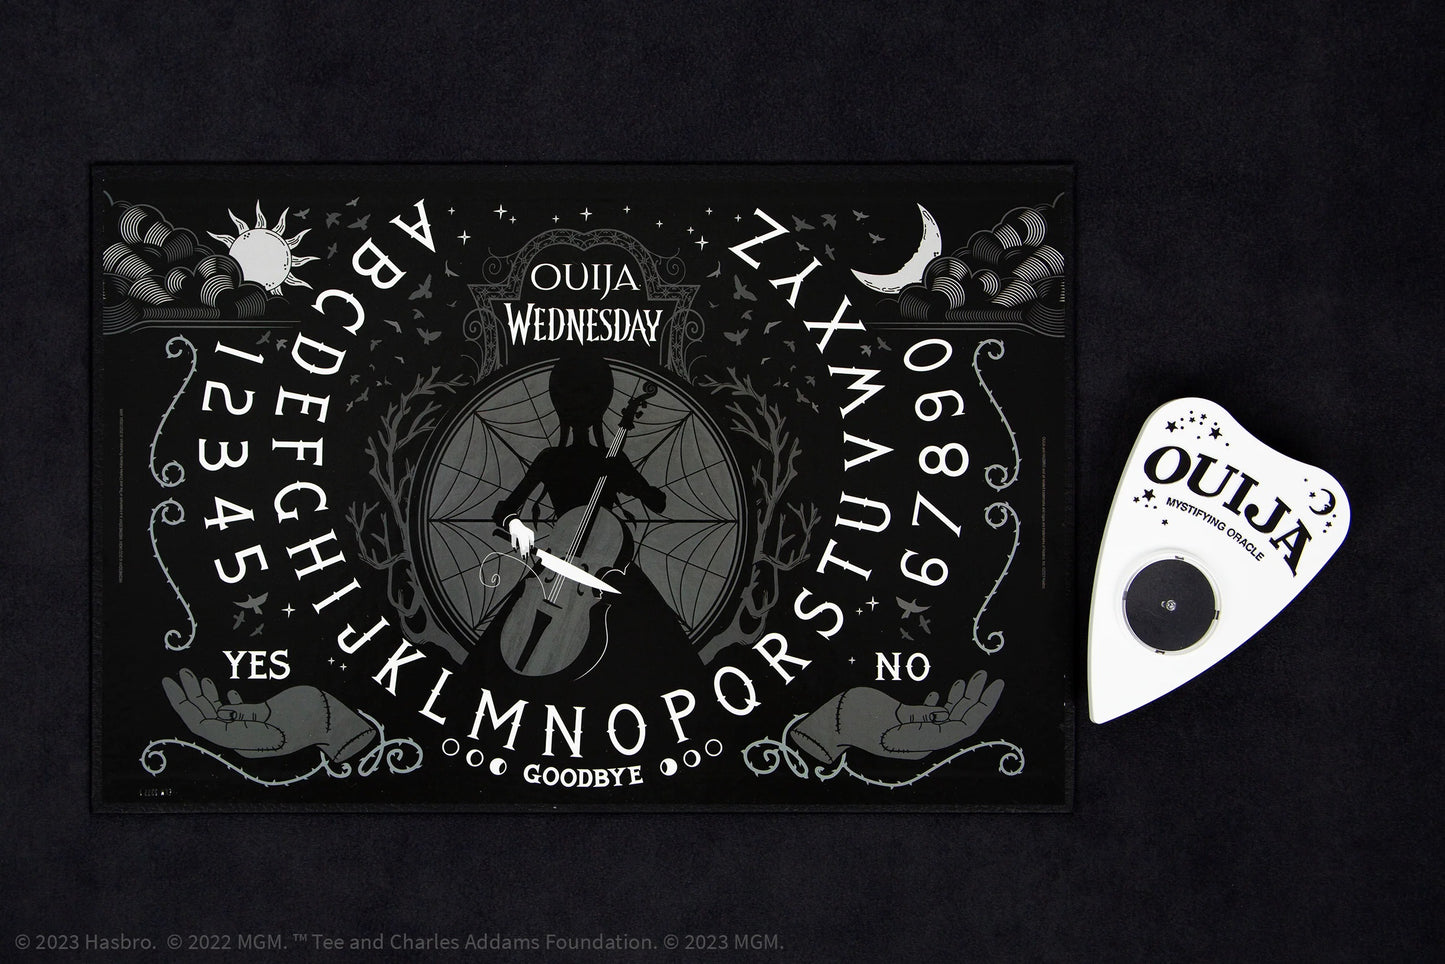 Ouija - Wednesday